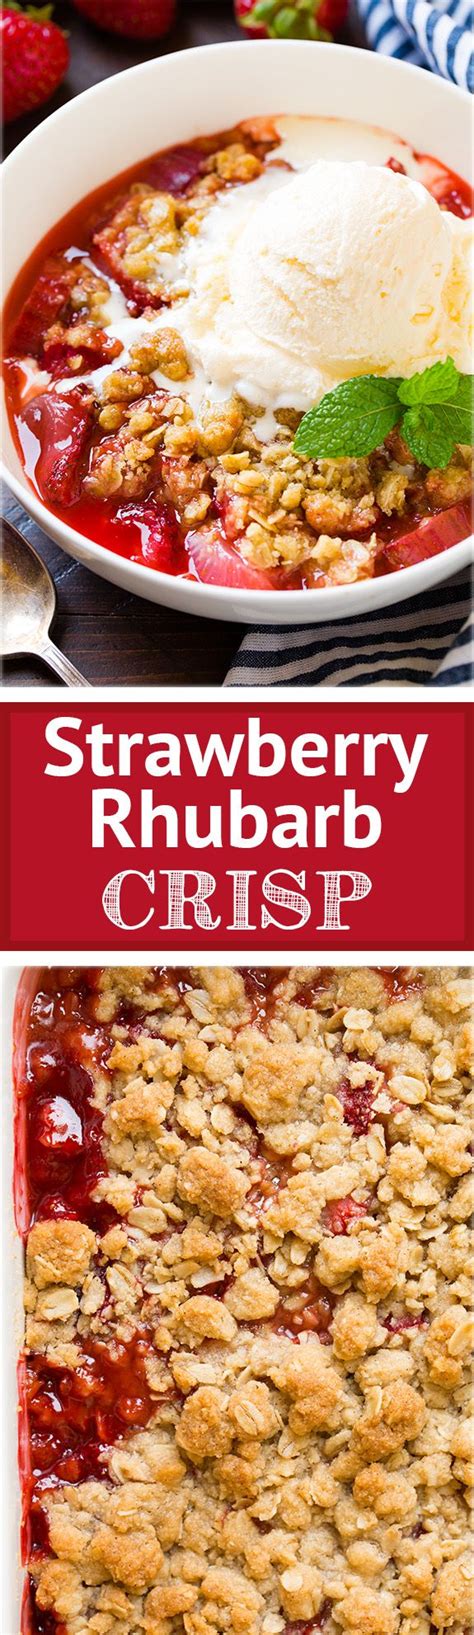 Strawberry Rhubarb Crisp This Is My New Favorite Rhubarb Recipe Its